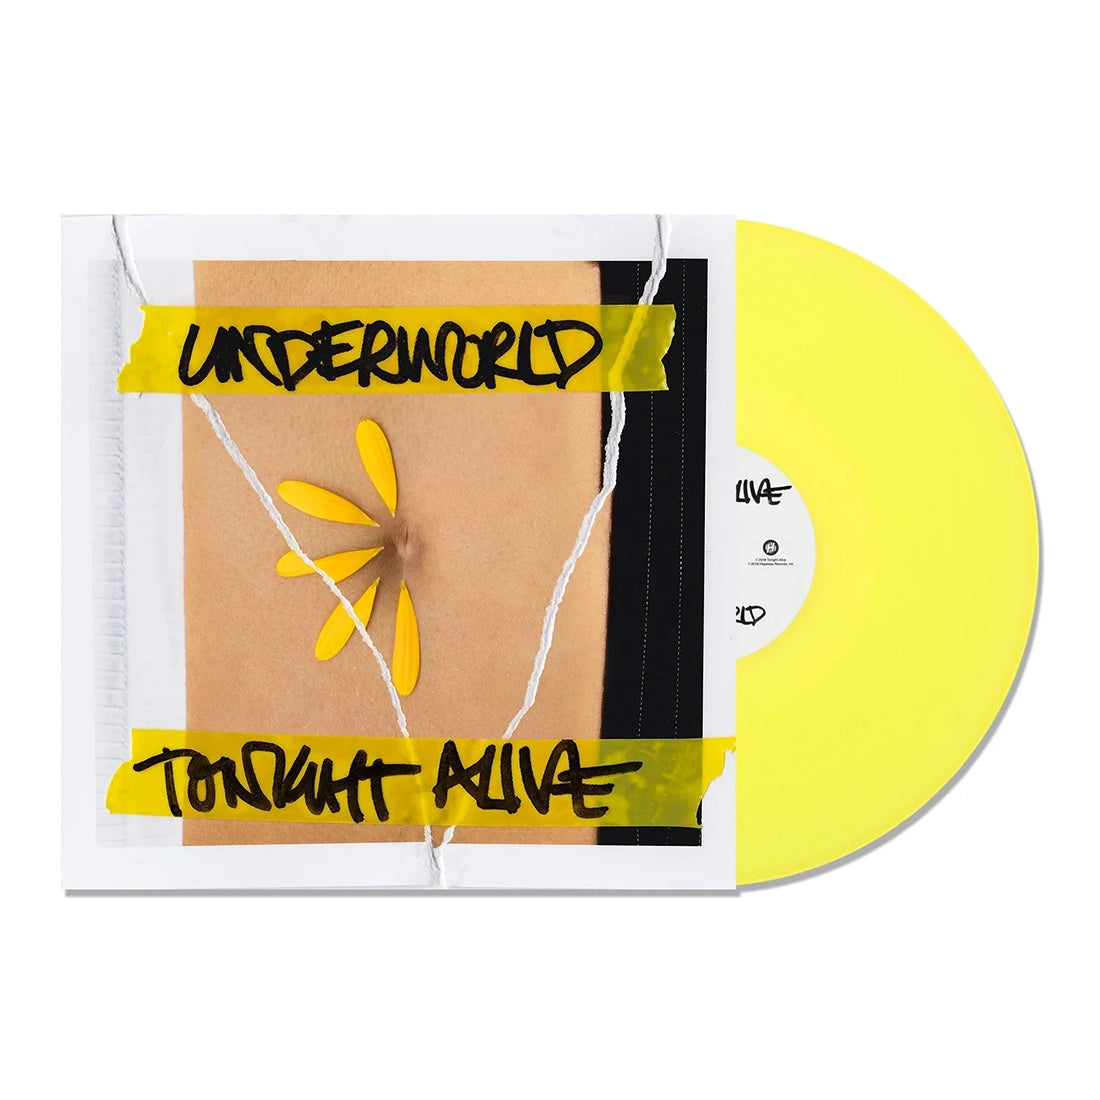 Tonight Alive - Underworld: Yellow Vinyl LP